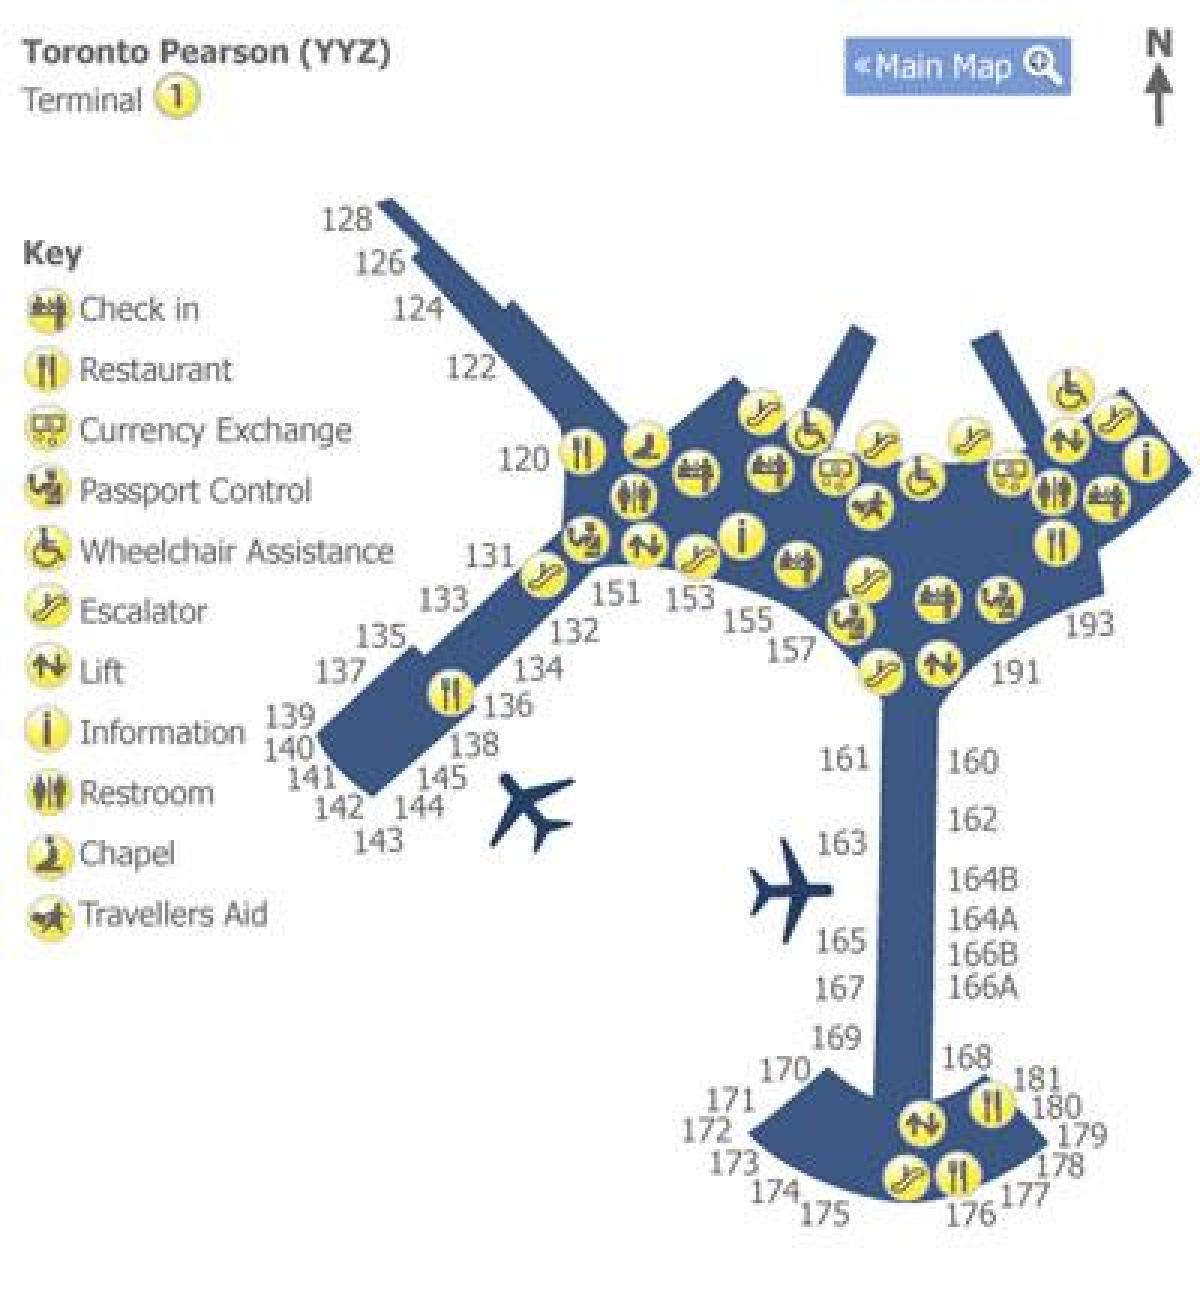 Mapa de Toronto Pearson terminal 1 do aeroporto